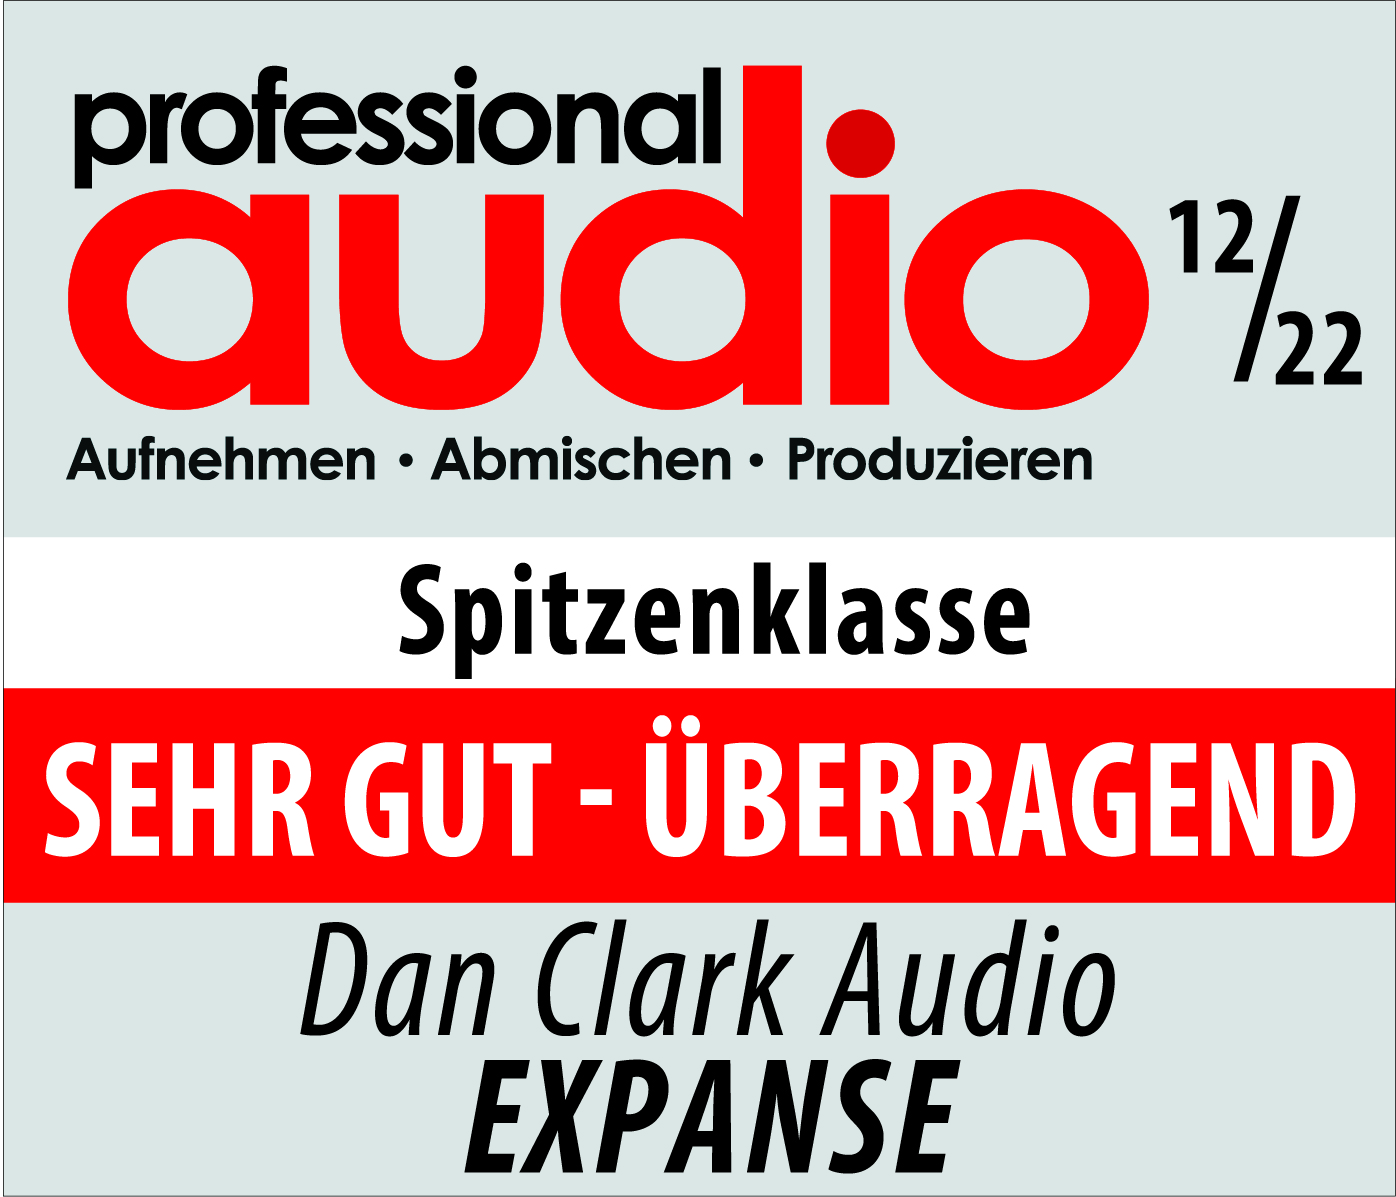 PAM-12_22_Testsiegel_Dan-Clark-Audio-EXPANSES75ktNCwHbpdZ